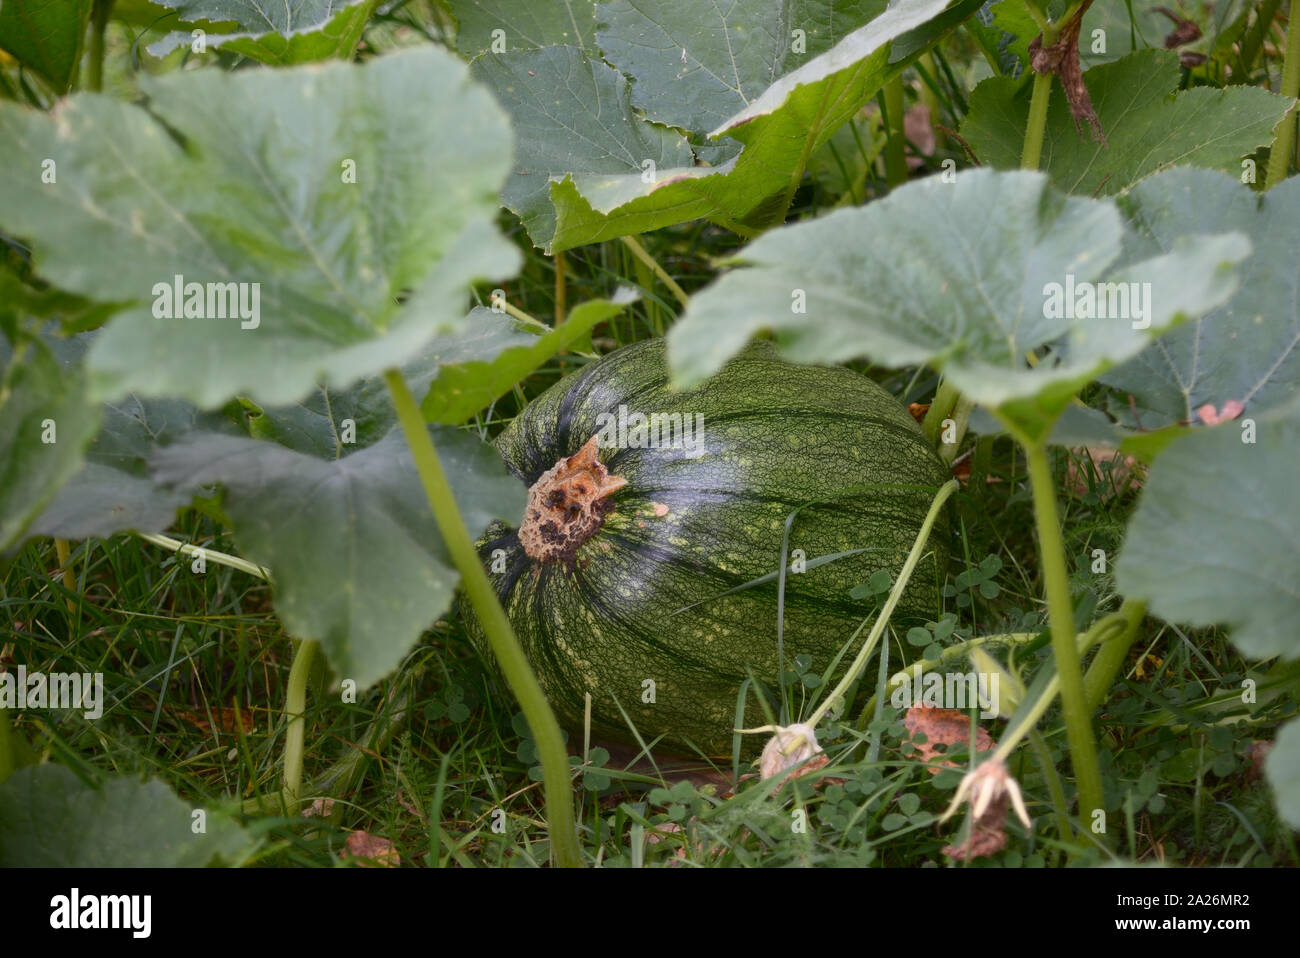 Big striped green home grown organic pumpkin growing in the vegetable garden. Stock Photo